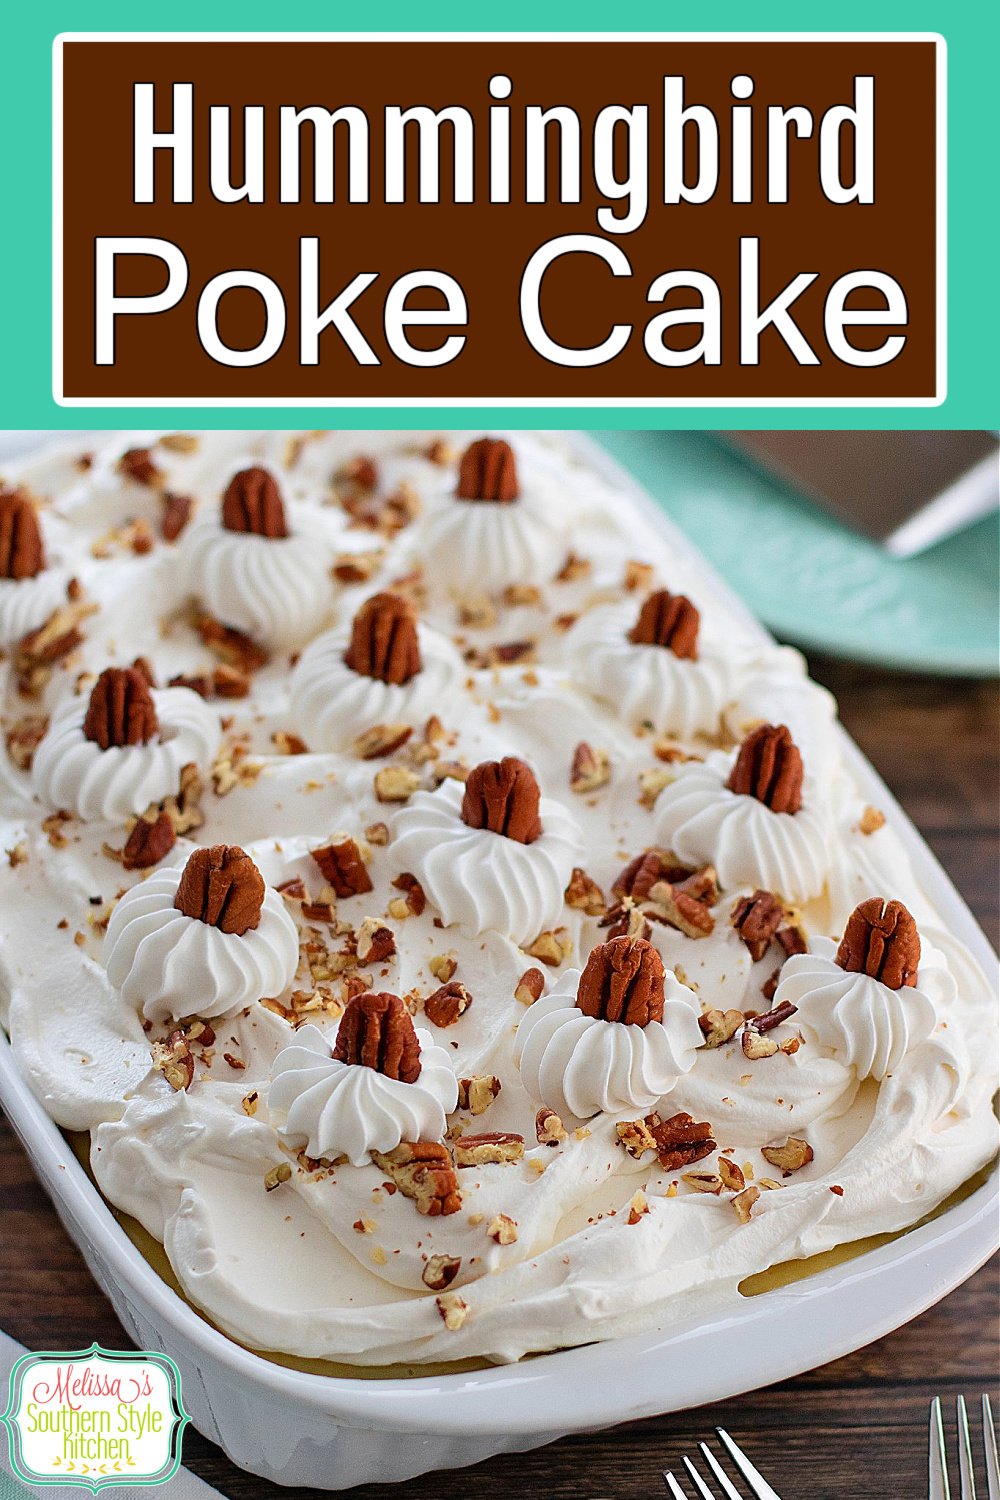 This Hummingbird Cake Poke Cake is a delicious riff on the famous Hummingbird Cake any baker can make #hummingbirdcake #hummingbirdpokecake #pokecakerecipe #cakes #sheetcake #southerndesserts #pineapplecake #coconutcake #cakemixhacks via @melissasssk